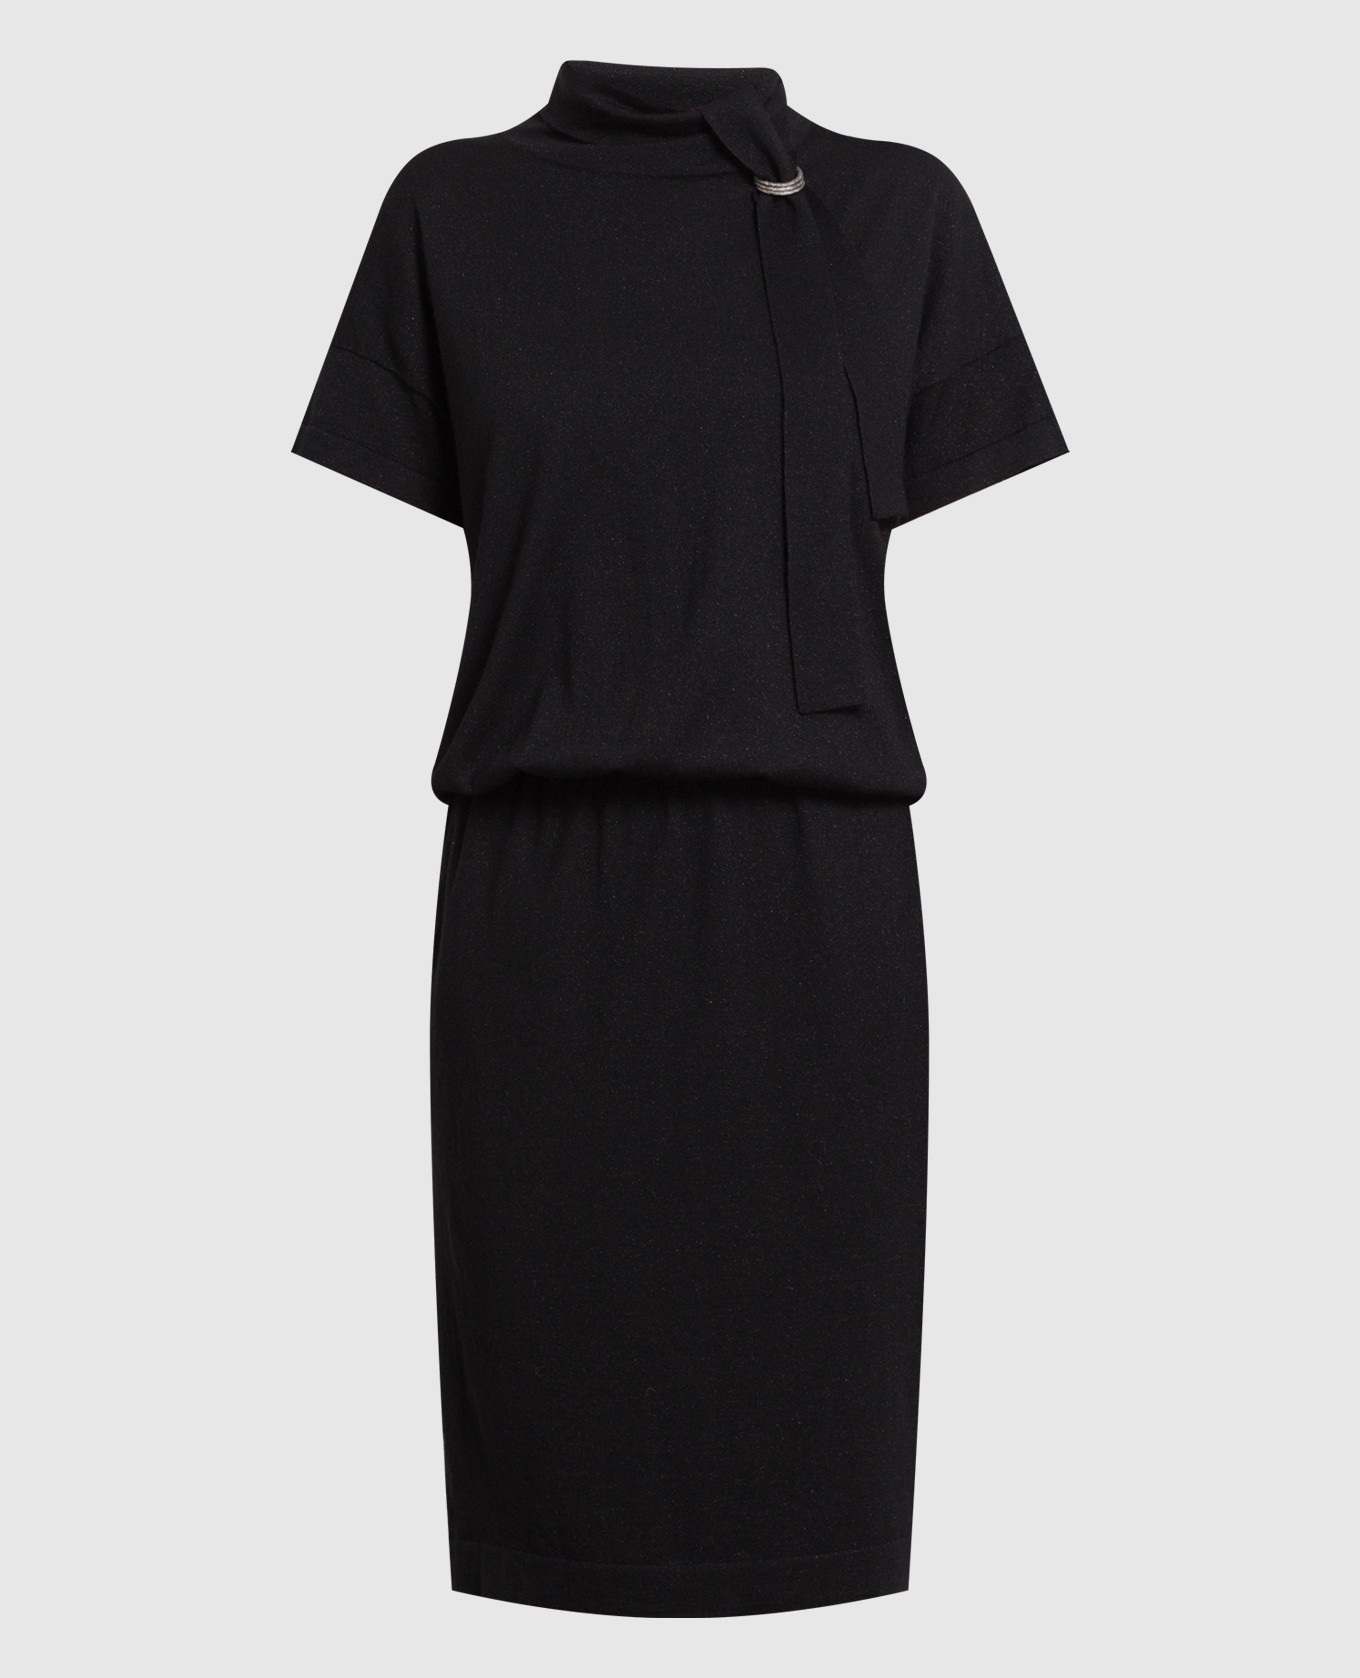 Black midi dress with lurex